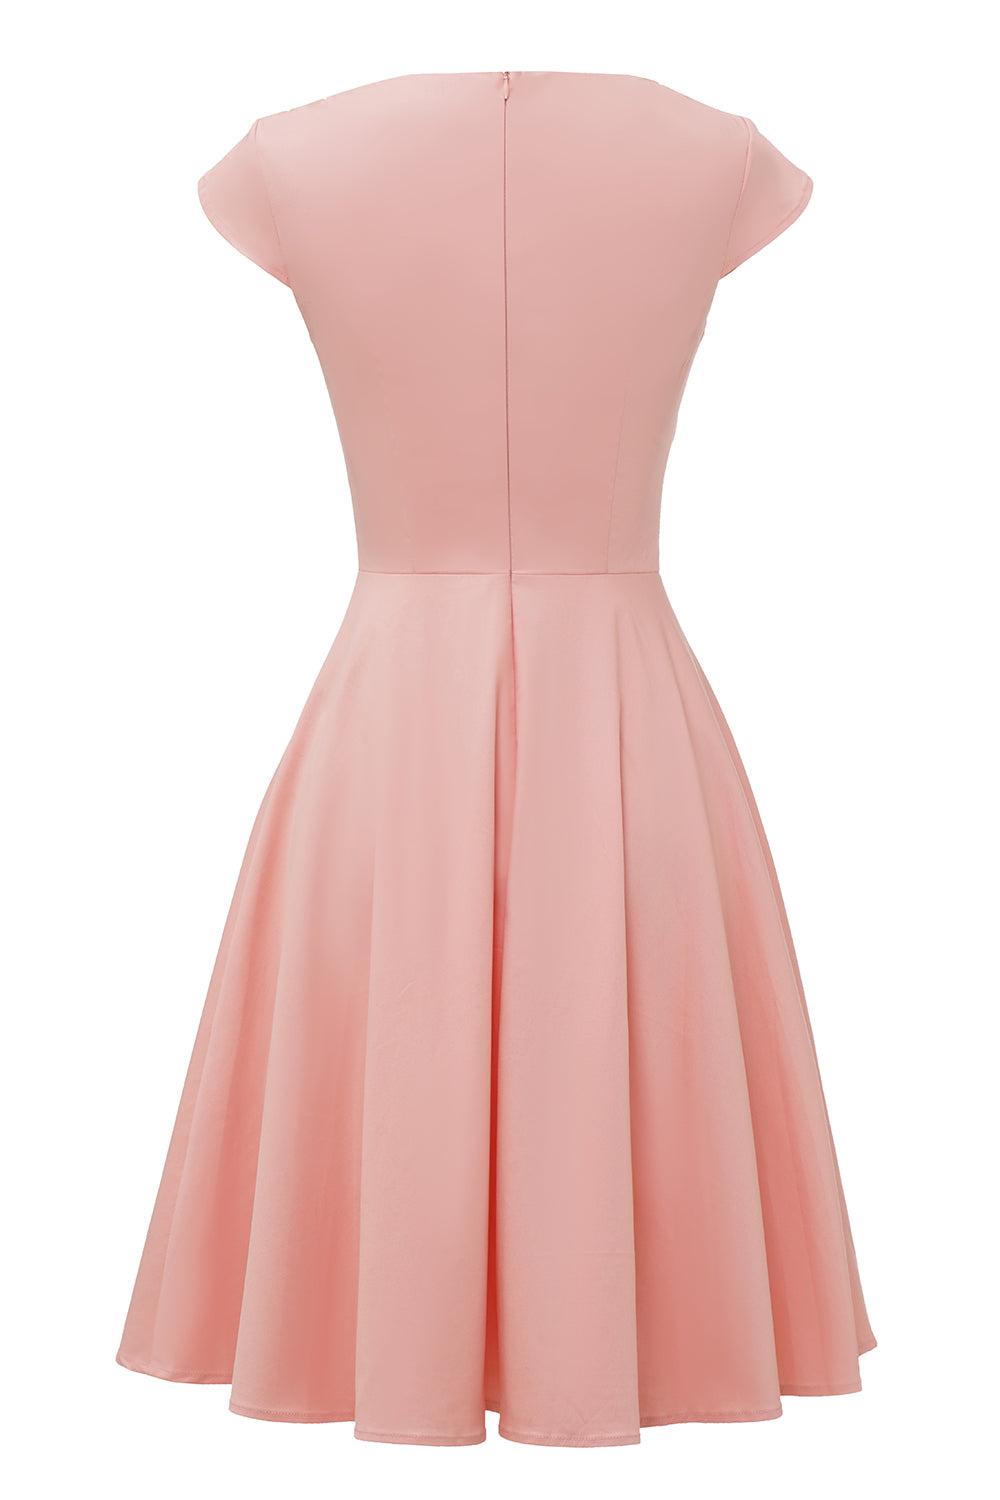 Blush Short Sleeves Vintage 1950s Dress